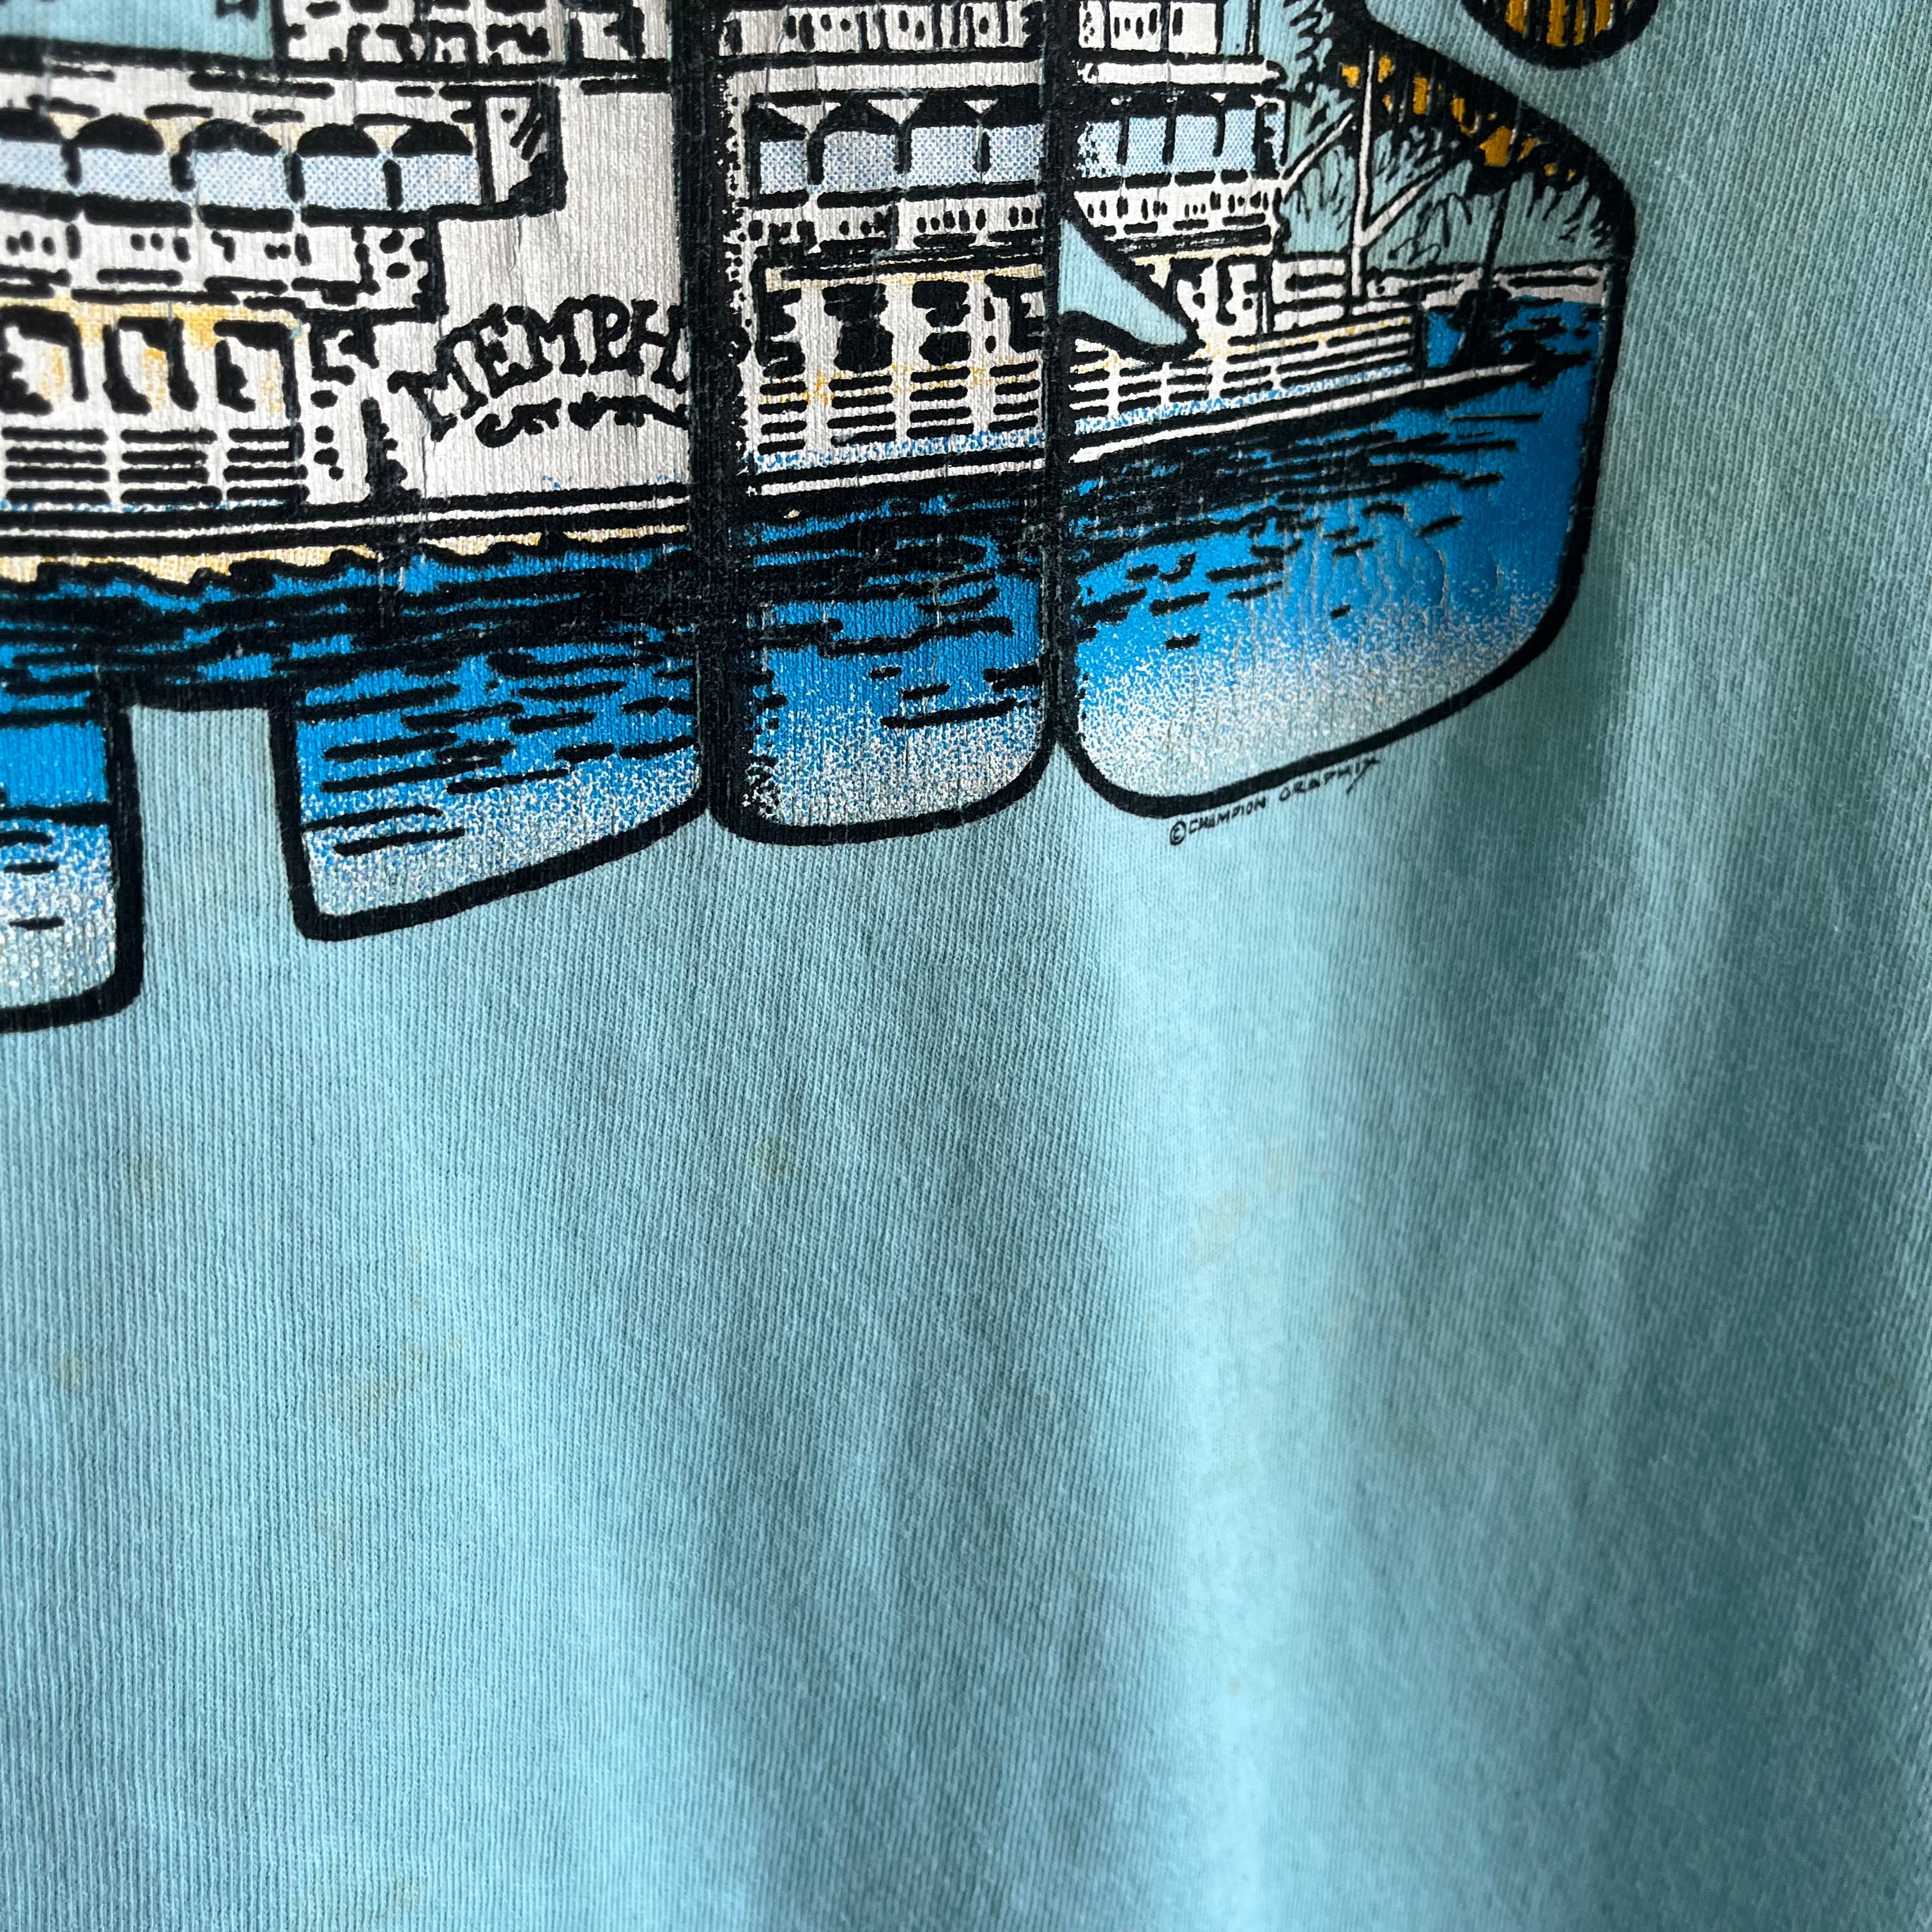 1980s Memphis Tourist T-Shirt